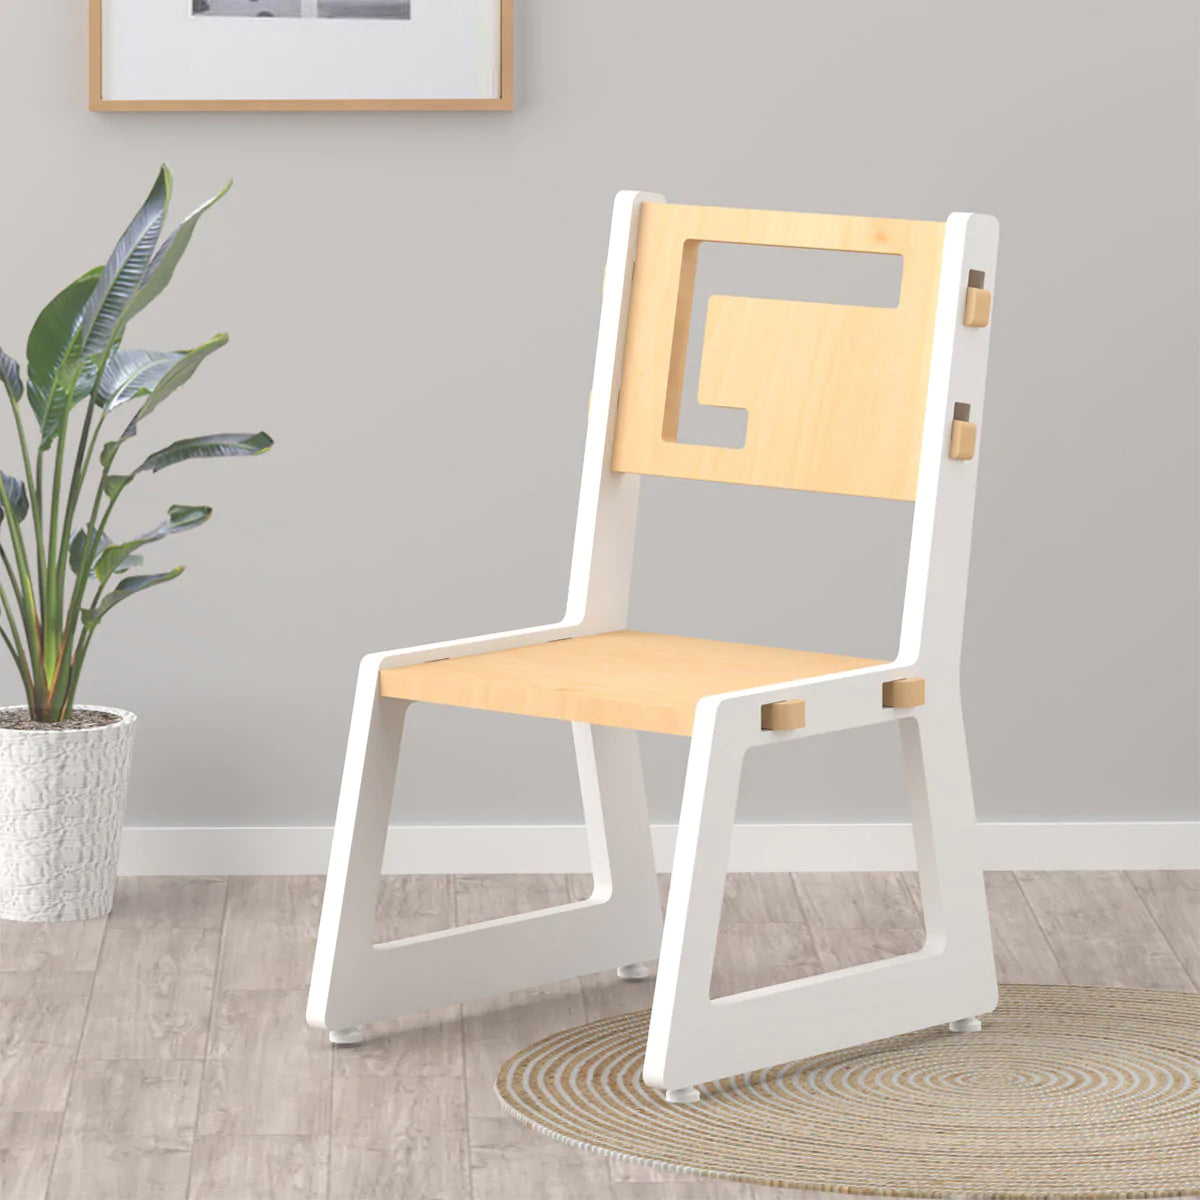 Buy Blue Apple Wooden Chair - White - Learning Furniture - SkilloToys.com